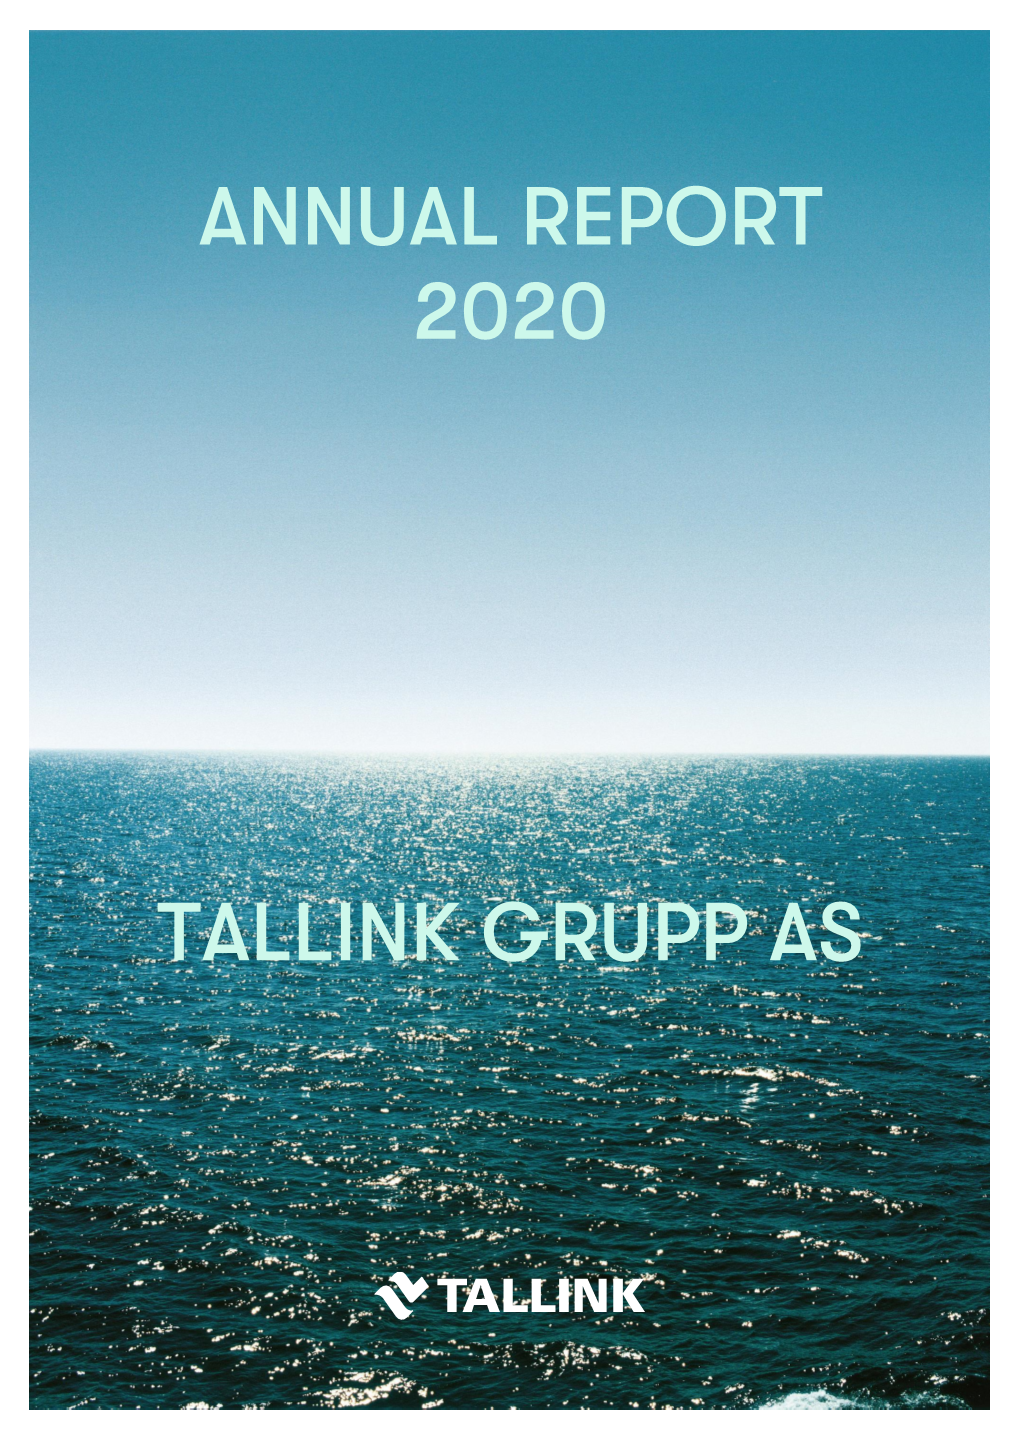 Annual Report 2020 Tallink Grupp As